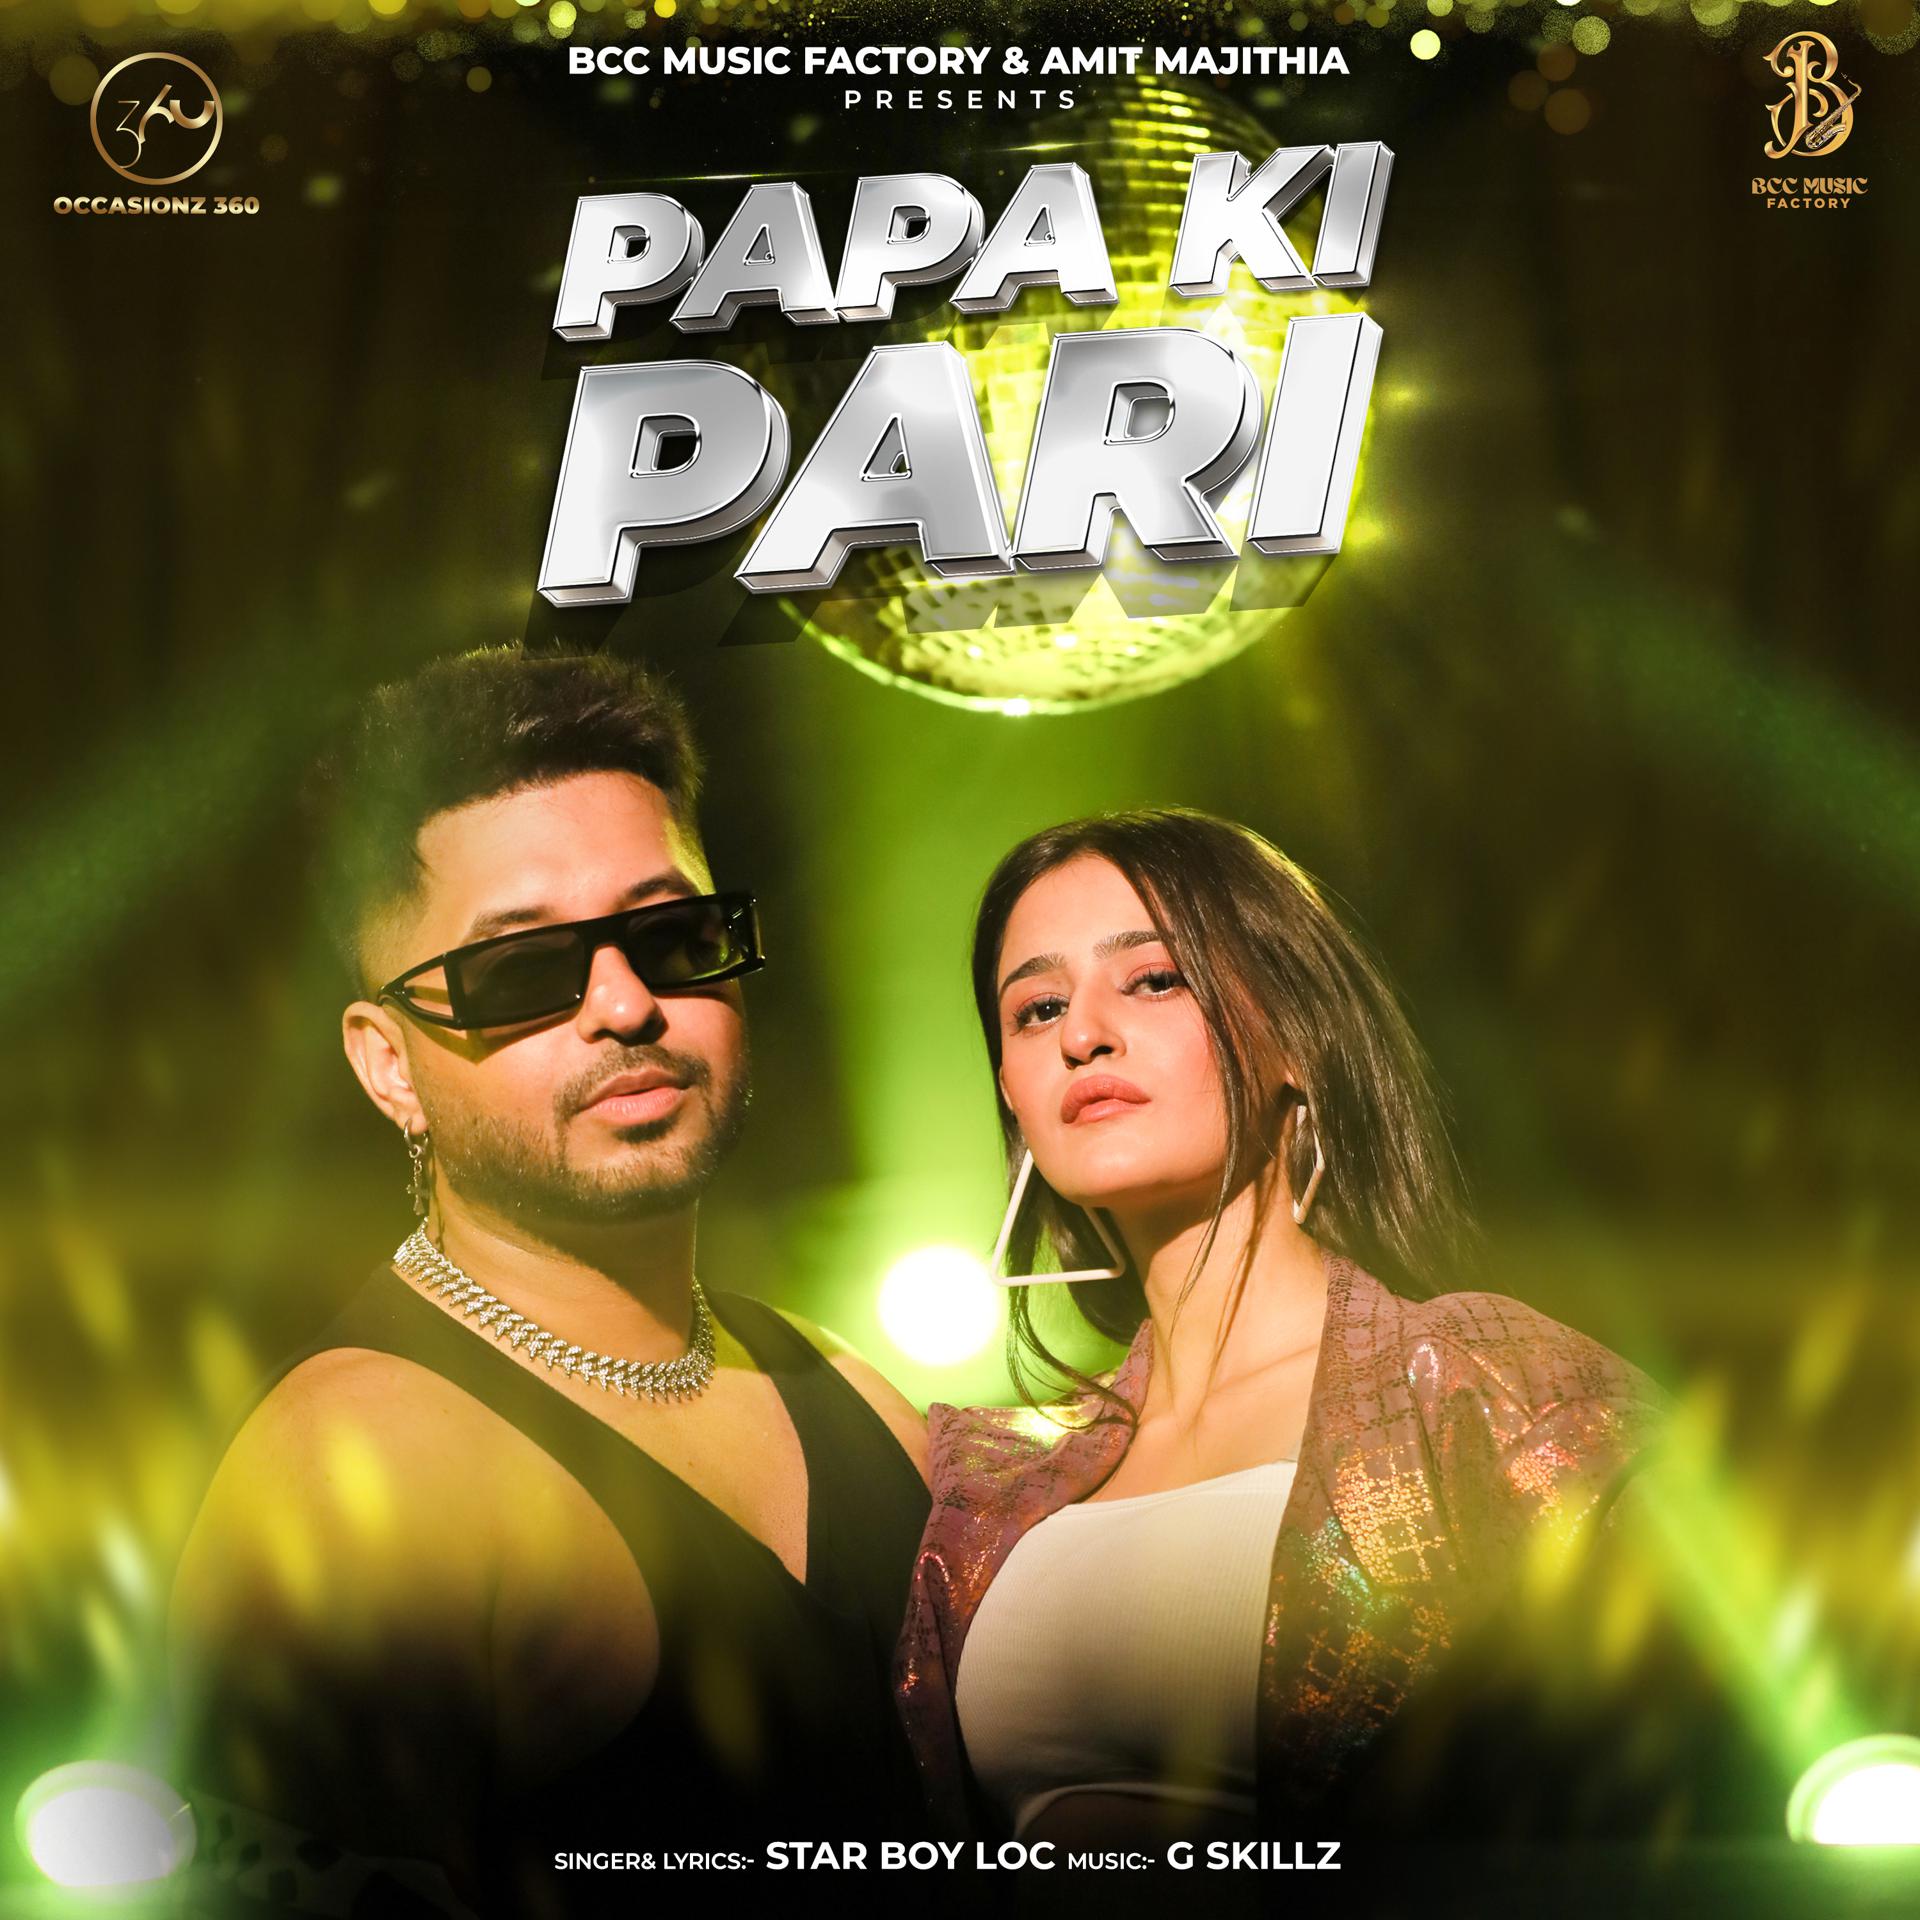 Постер альбома Papa Ki Pari